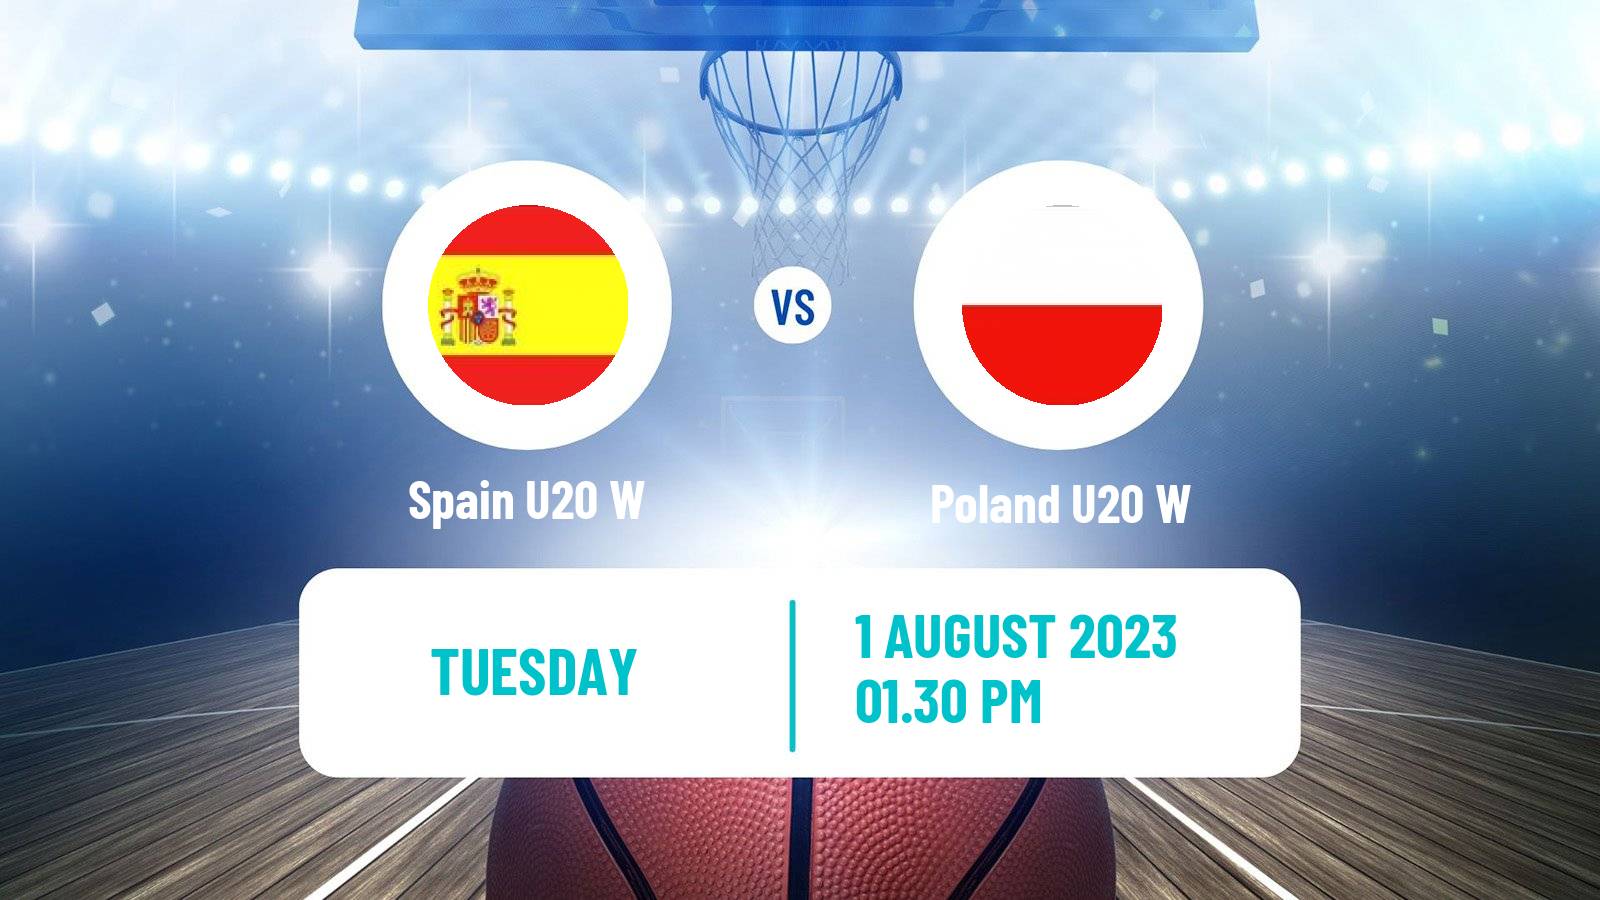 Basketball European Championship U20 Basketball Women Spain U20 W - Poland U20 W